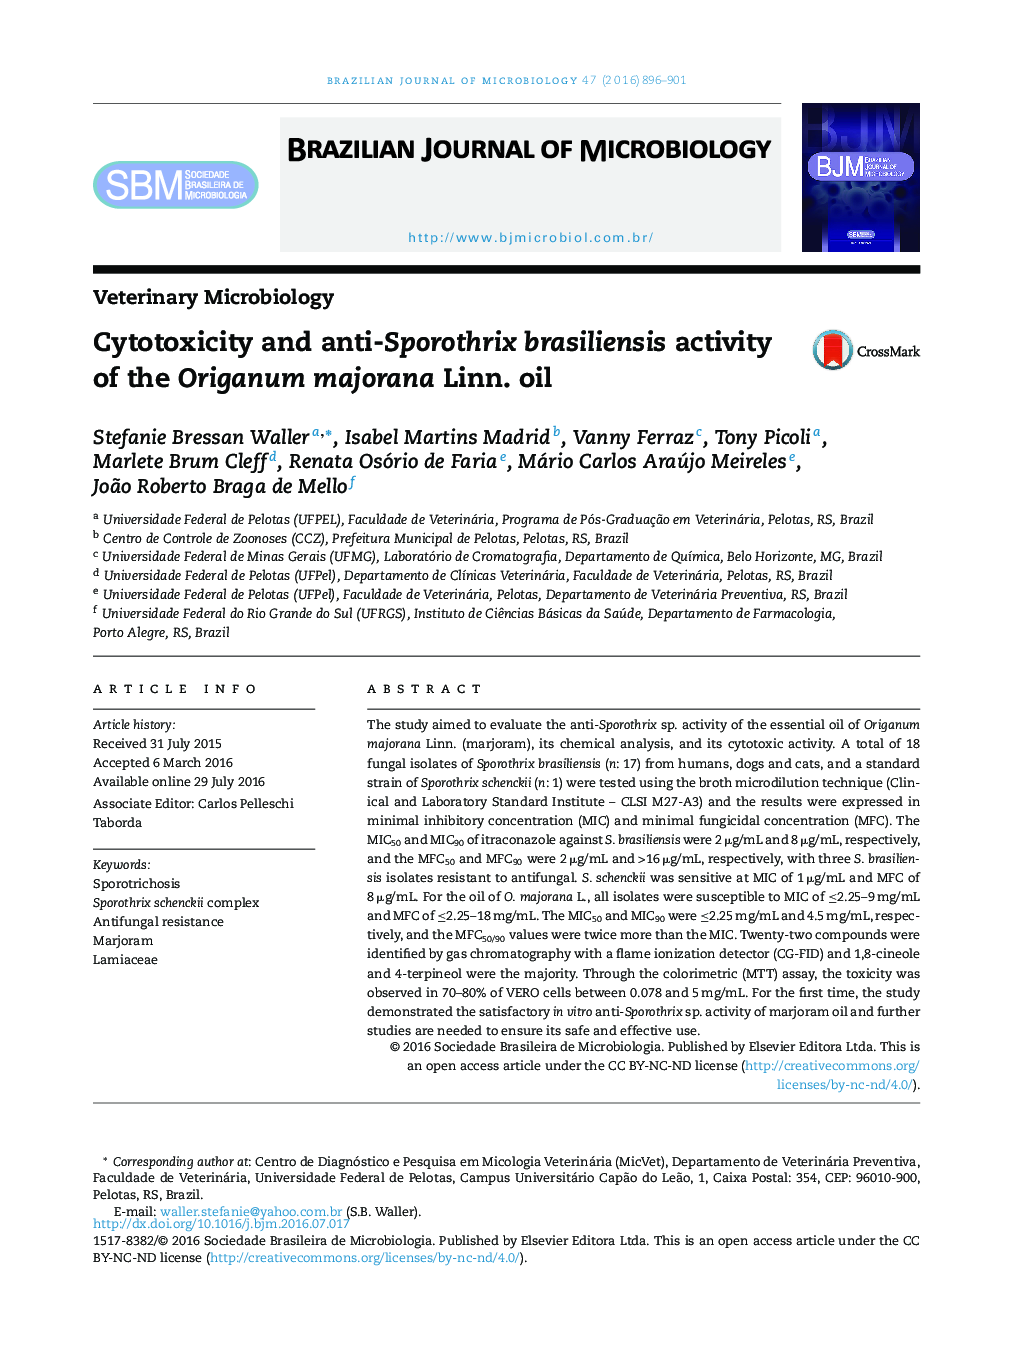 Cytotoxicity and anti-Sporothrix brasiliensis activity of the Origanum majorana Linn. oil